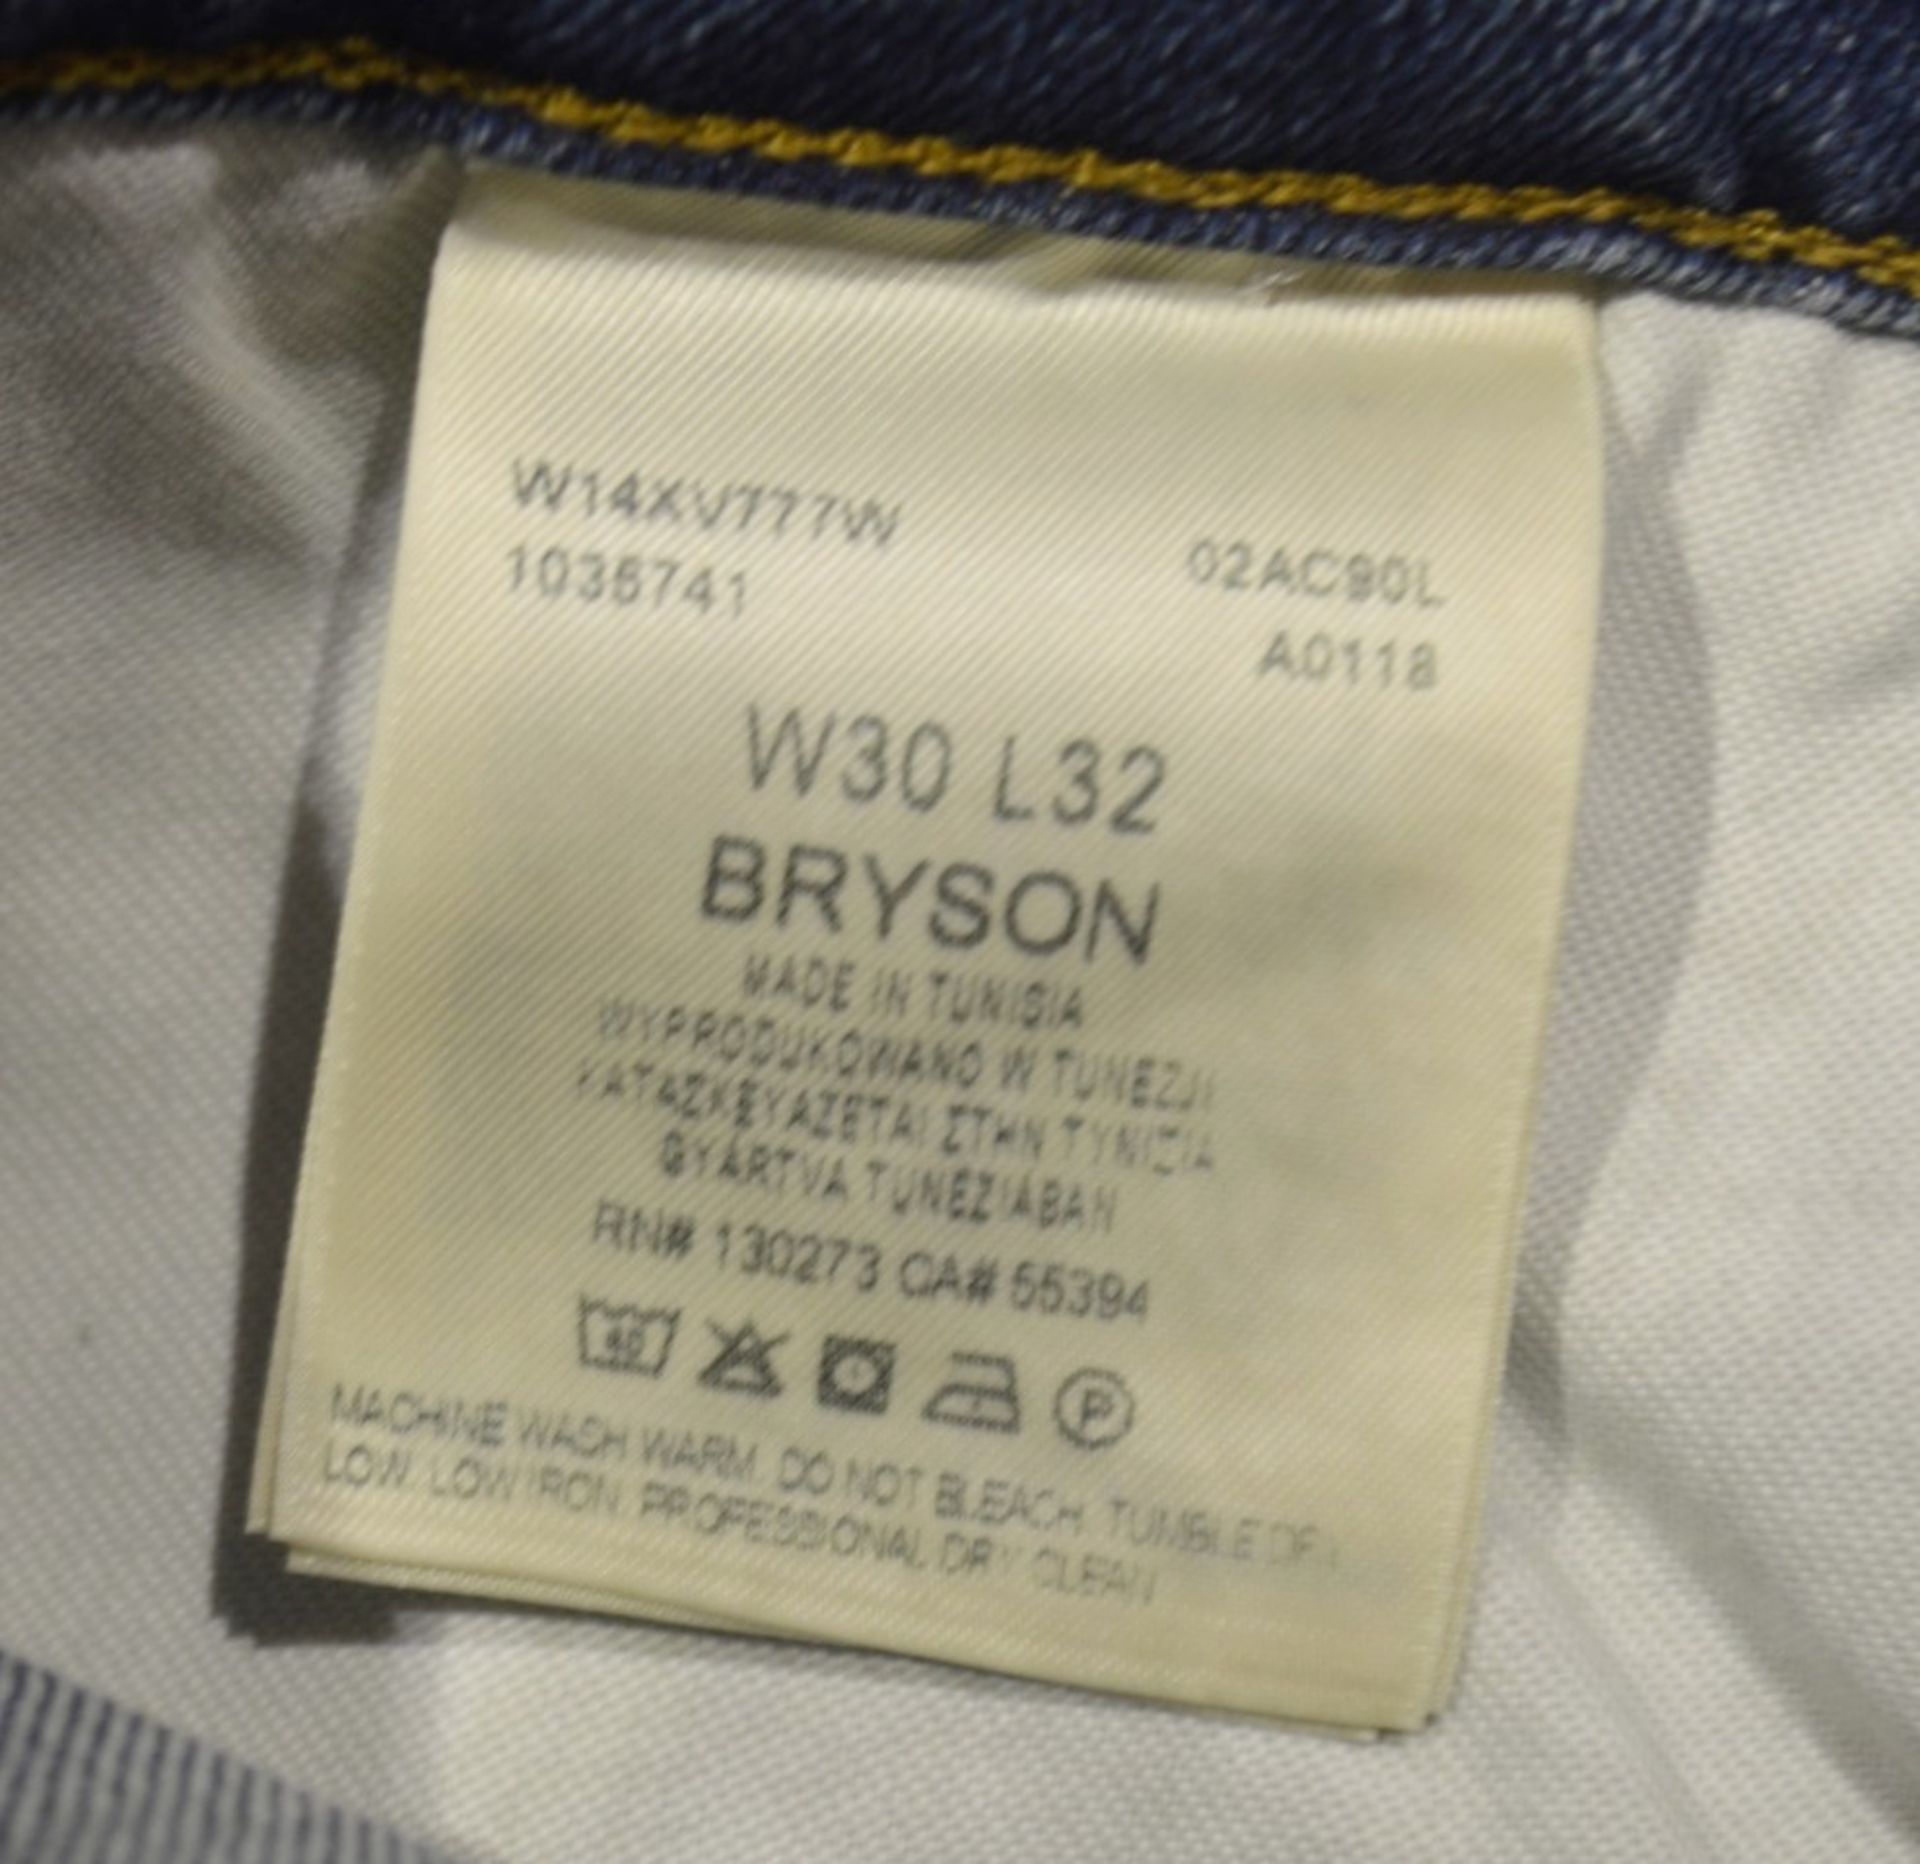 1 x Pair Of Men's Genuine Wrangler BRYSON Skinny Jeans In Blue - Size: UK 30/32 - Preowned, Like - Image 9 of 10